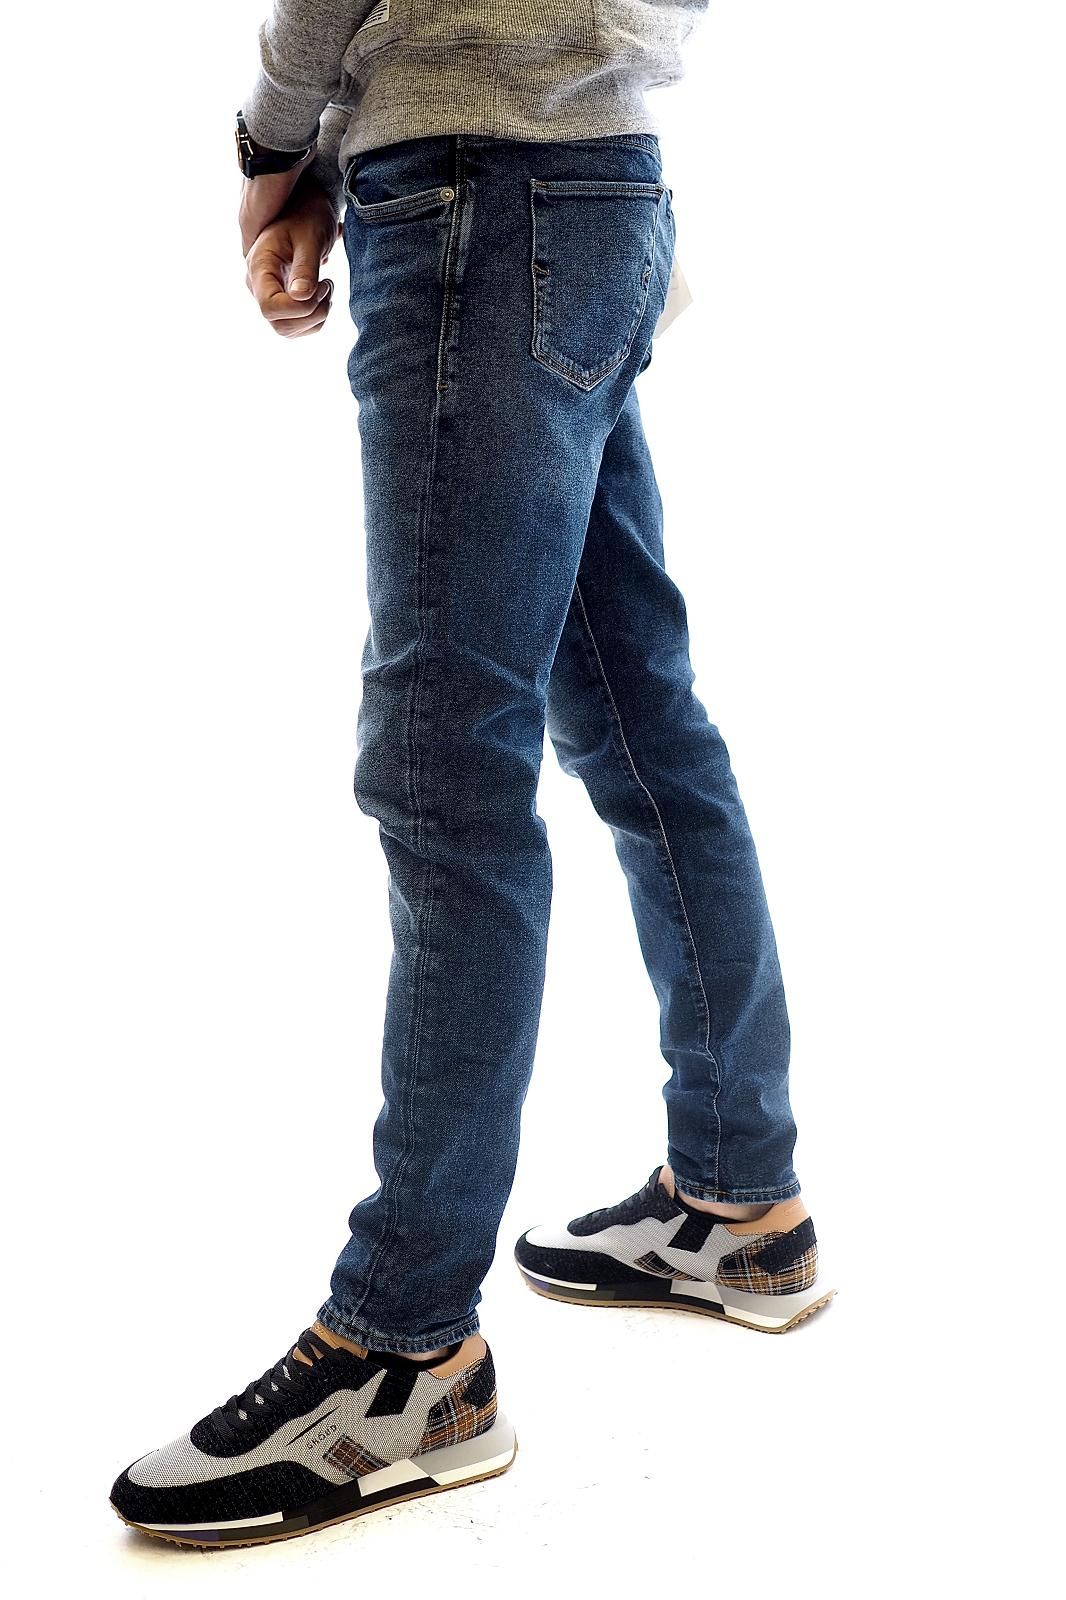 Selected  Homme pantalon Jeans hommes (SLCT/Man-Jeans Dark blue  - LEON jeans dark blue) - Marine | Much more than shoes